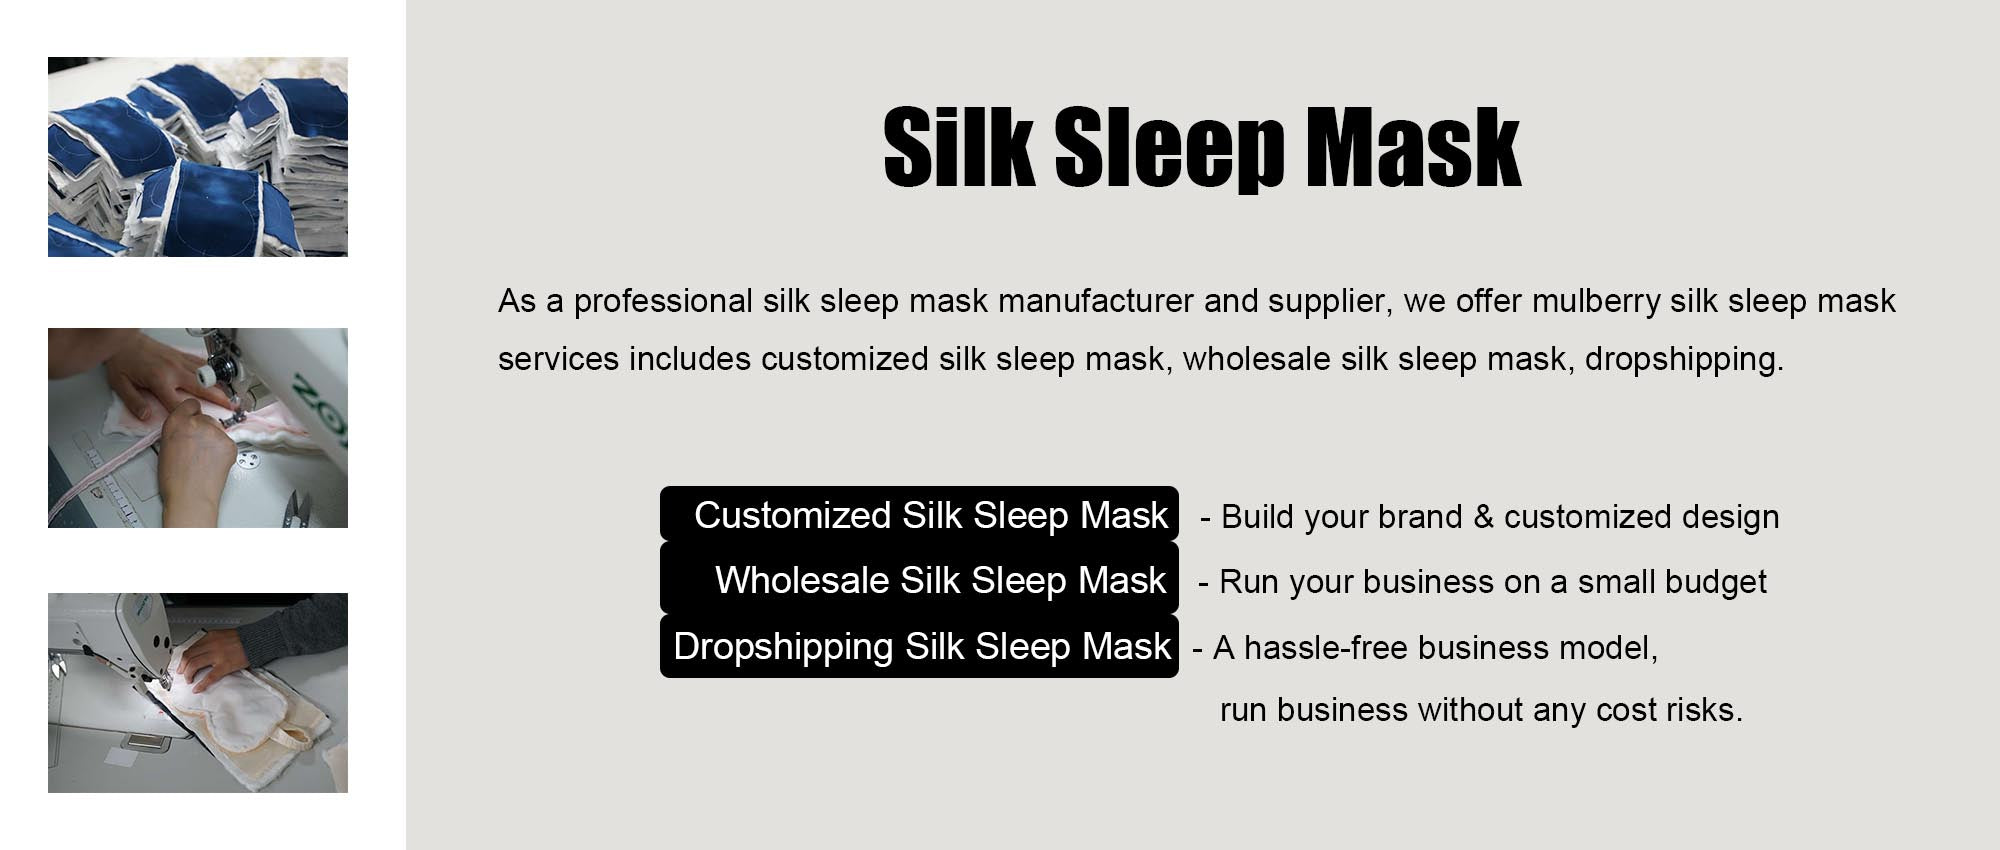 Mulberry Silk Sleep Mask